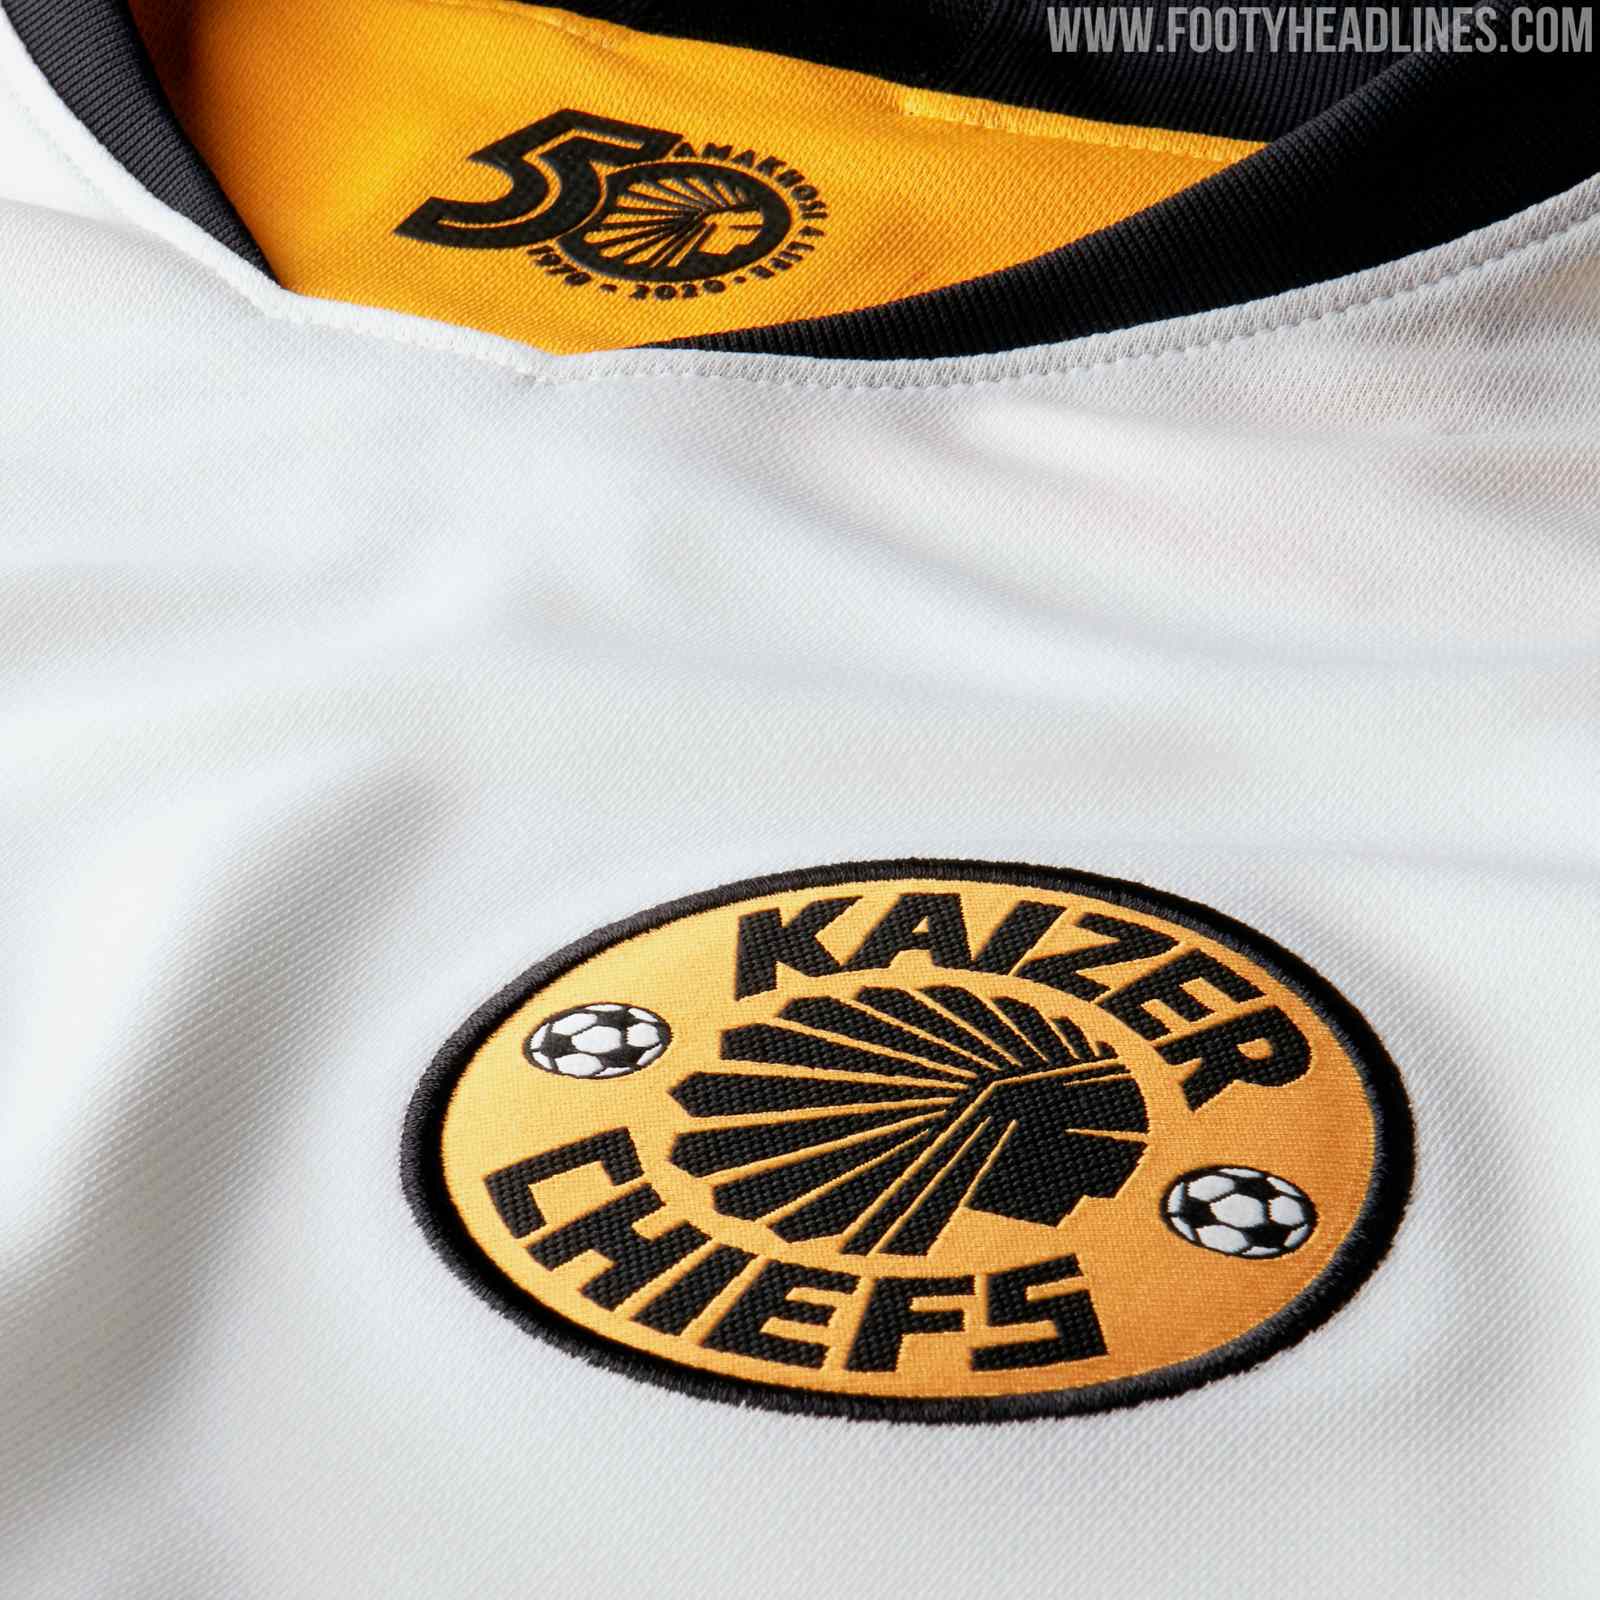 Mesmerizing Nike Kaizer Chiefs 19-20 Home & Away Kits Released - Footy ...